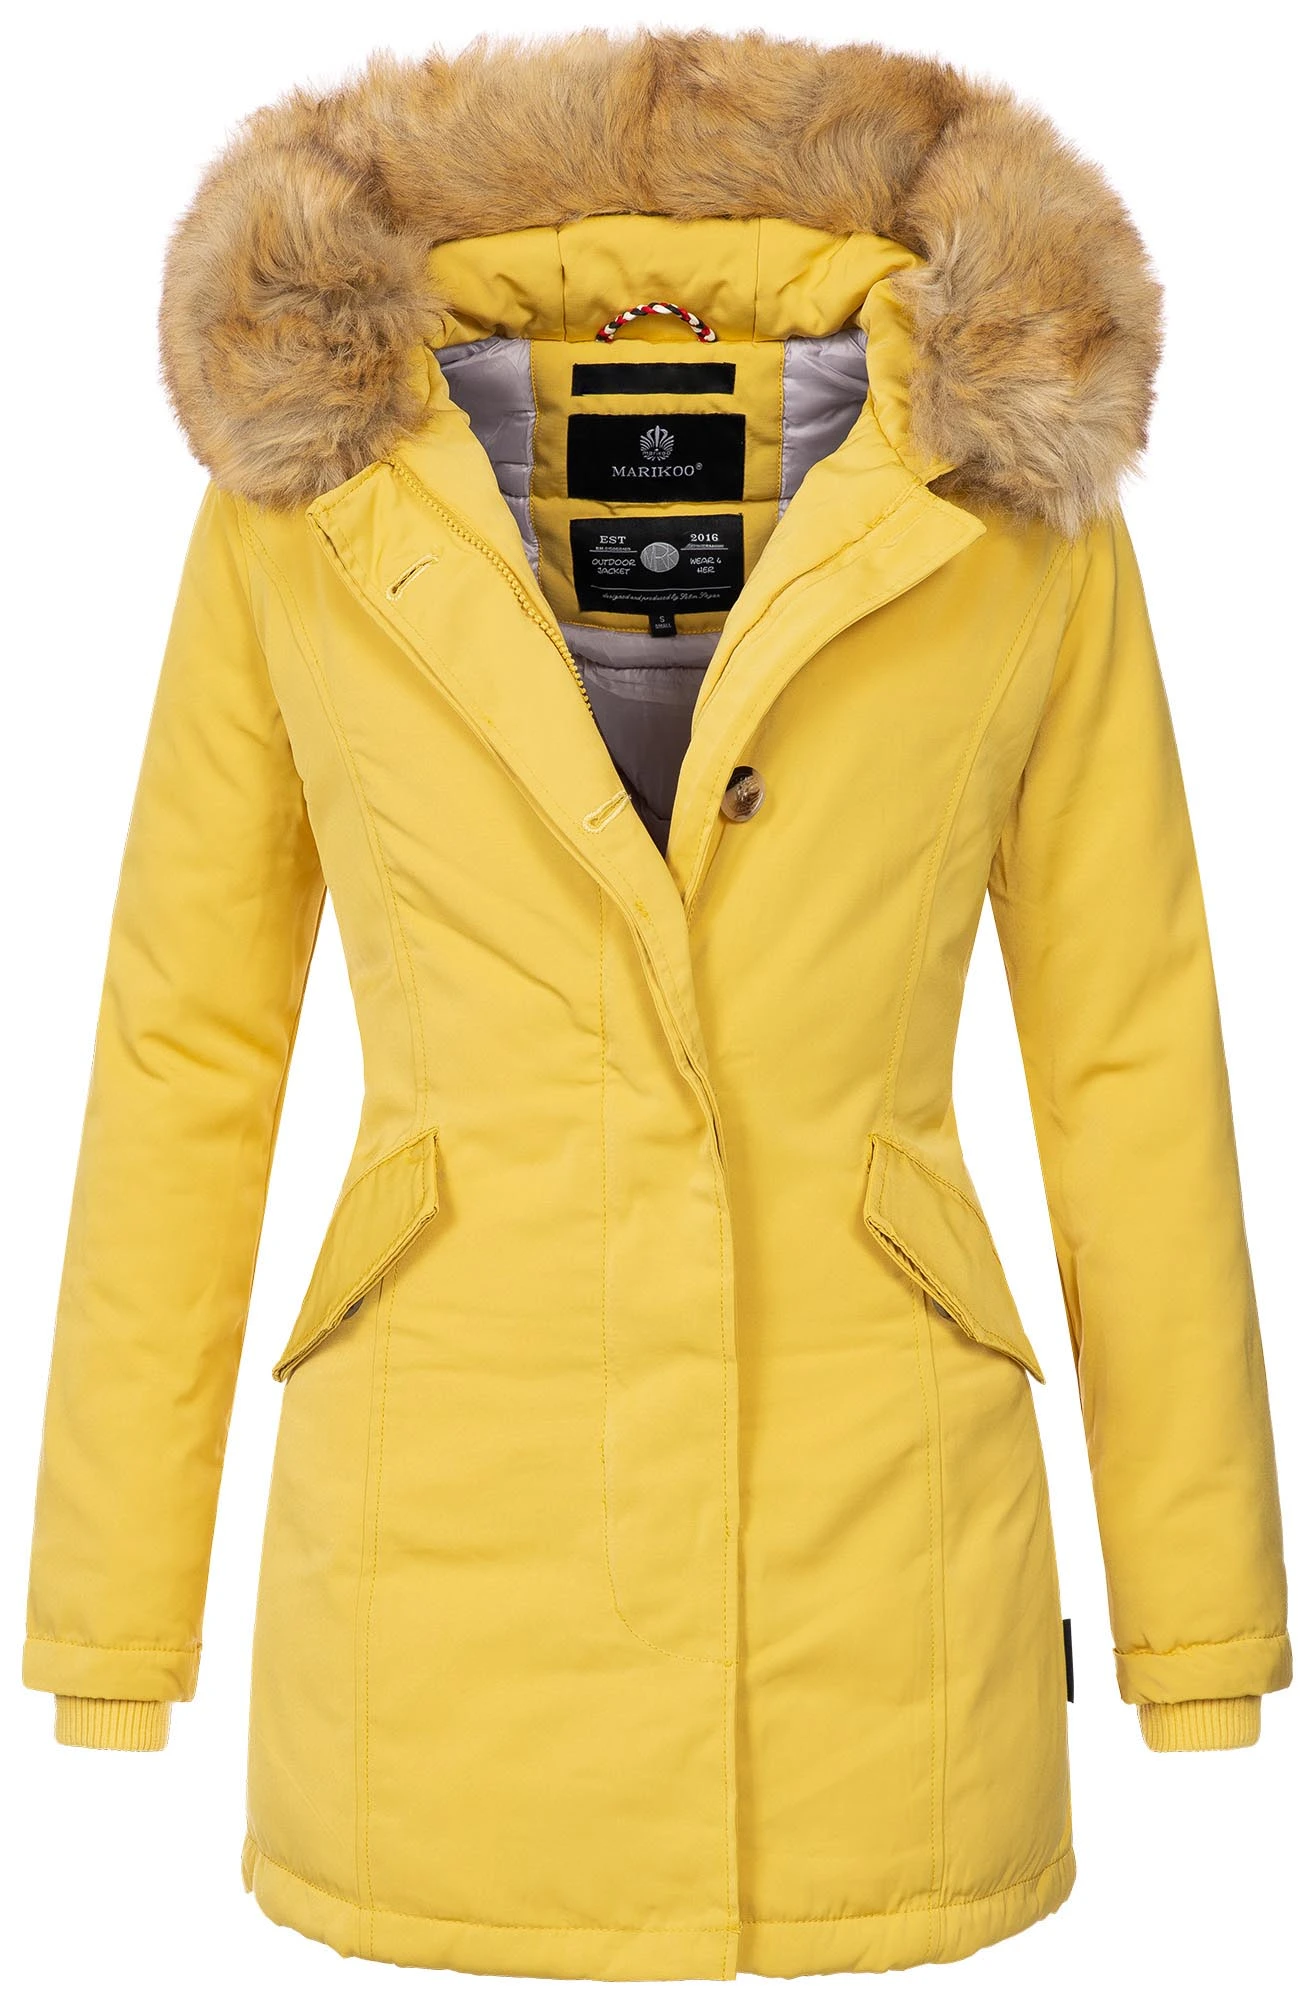 Ladies winter jacket coat coat winter jacket warm lining